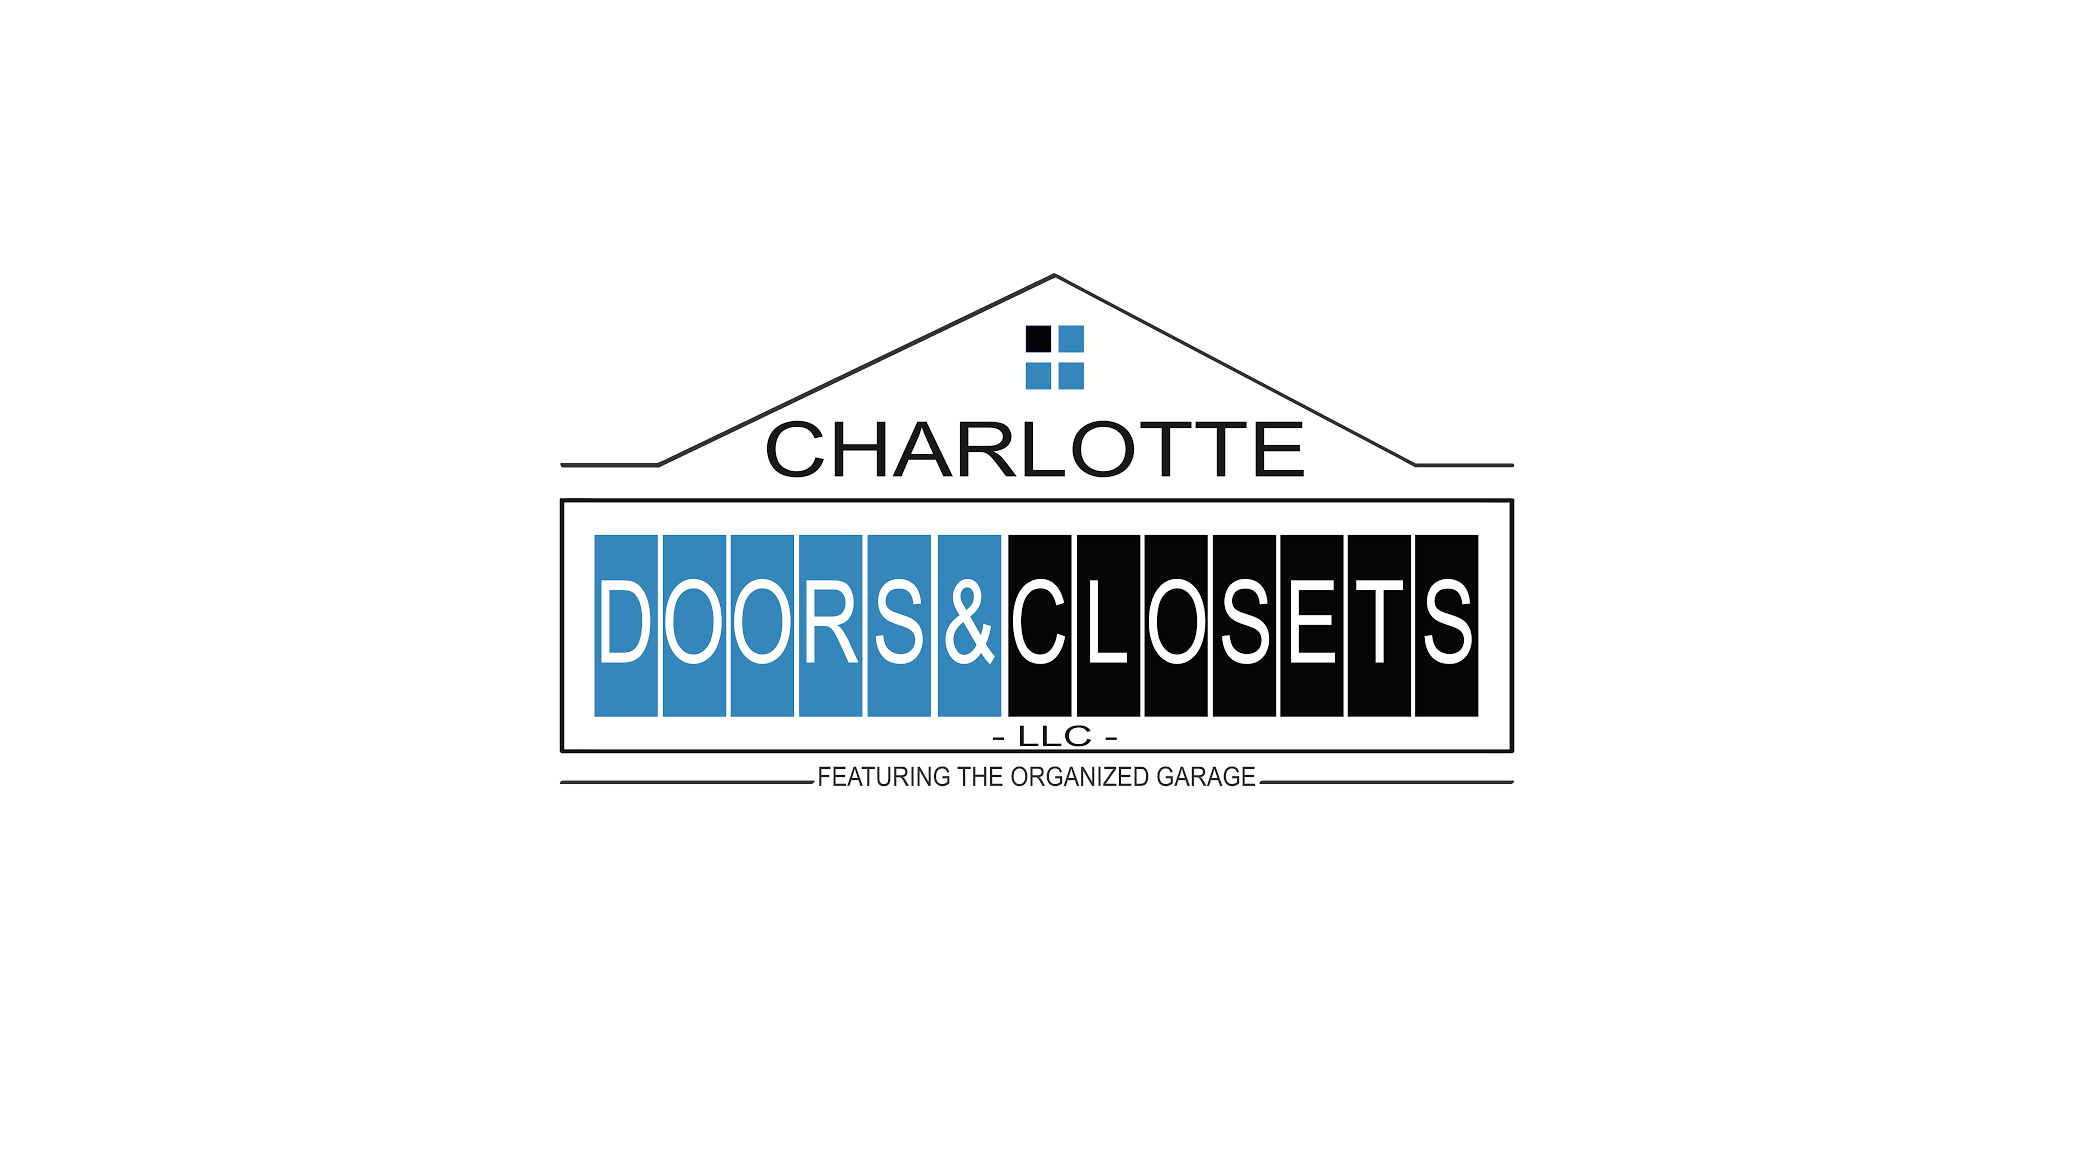 Get The Best Interior Door & Closet Design In Charlotte For Home Remodels